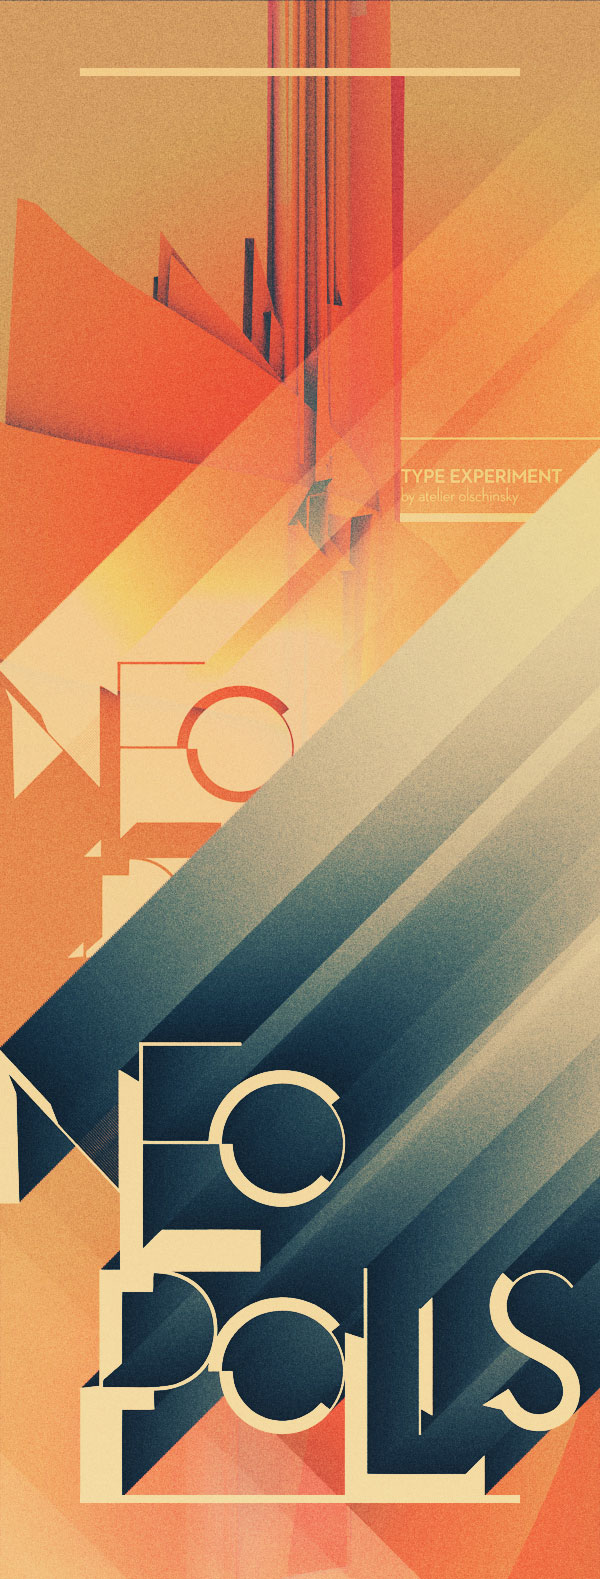 NEOPOLIS - Typography by Atelier Olschinsky